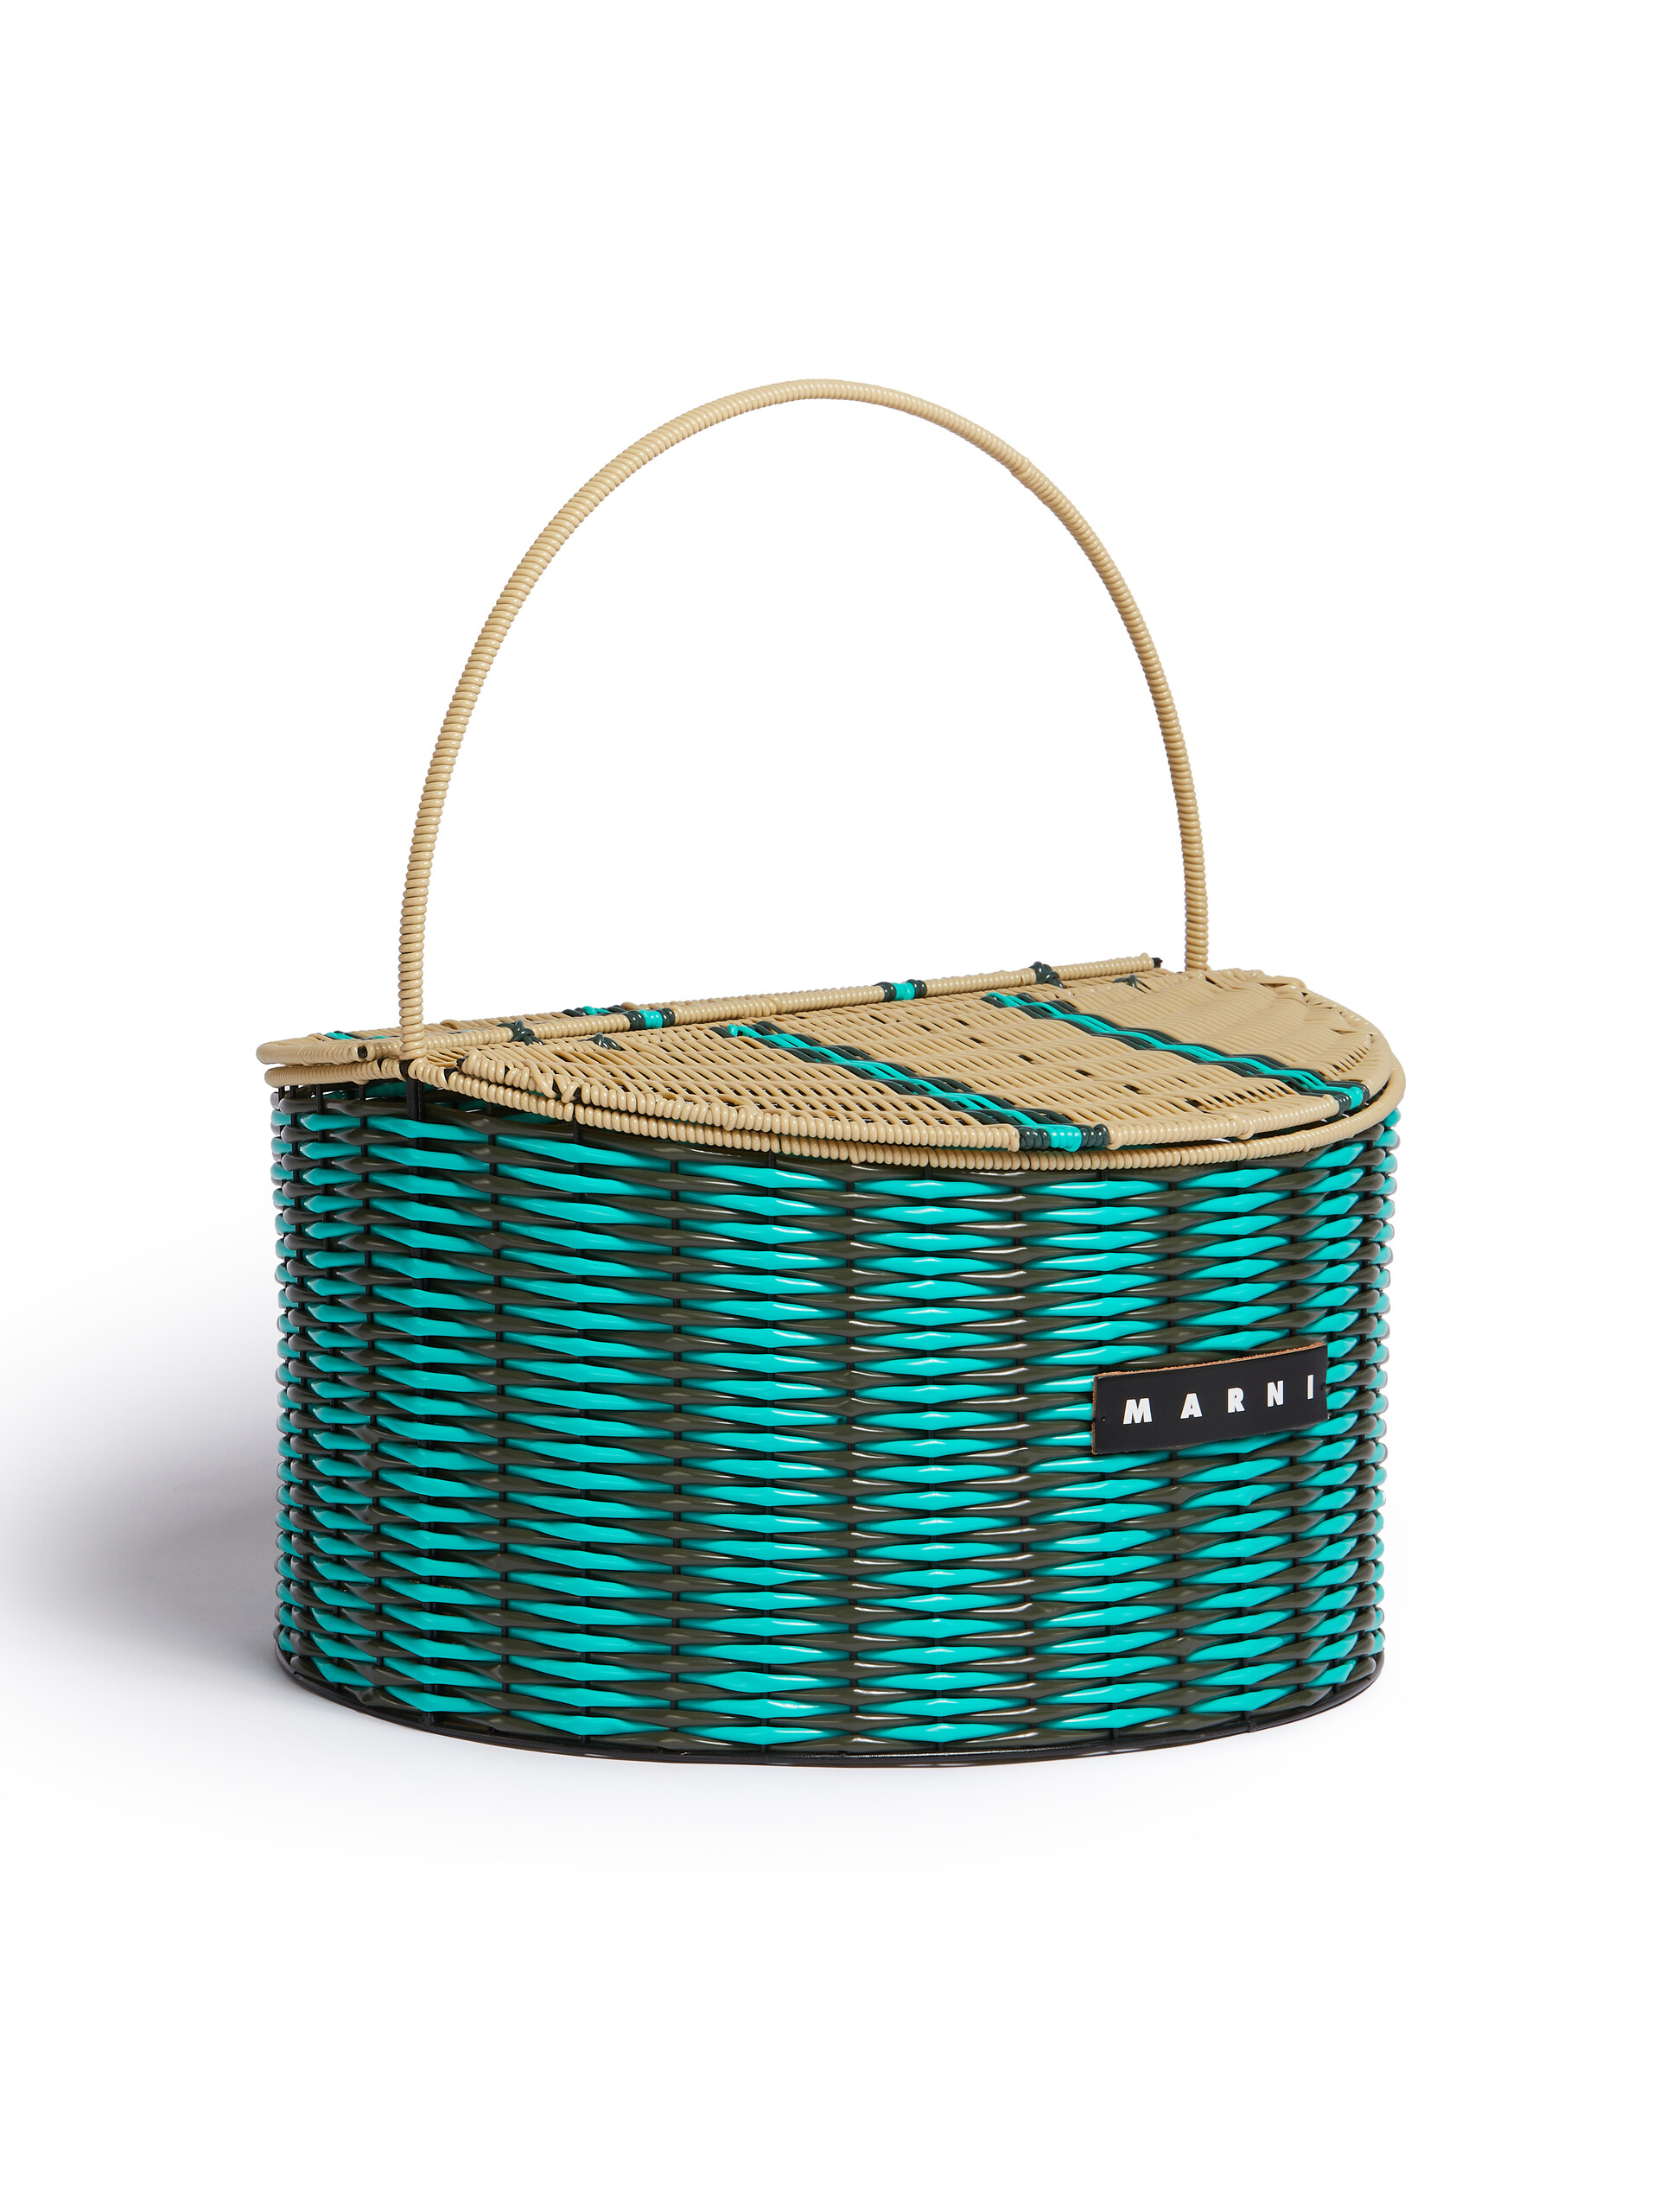 Green MARNI MARKET woven cable picnic basket - Accessories - Image 2